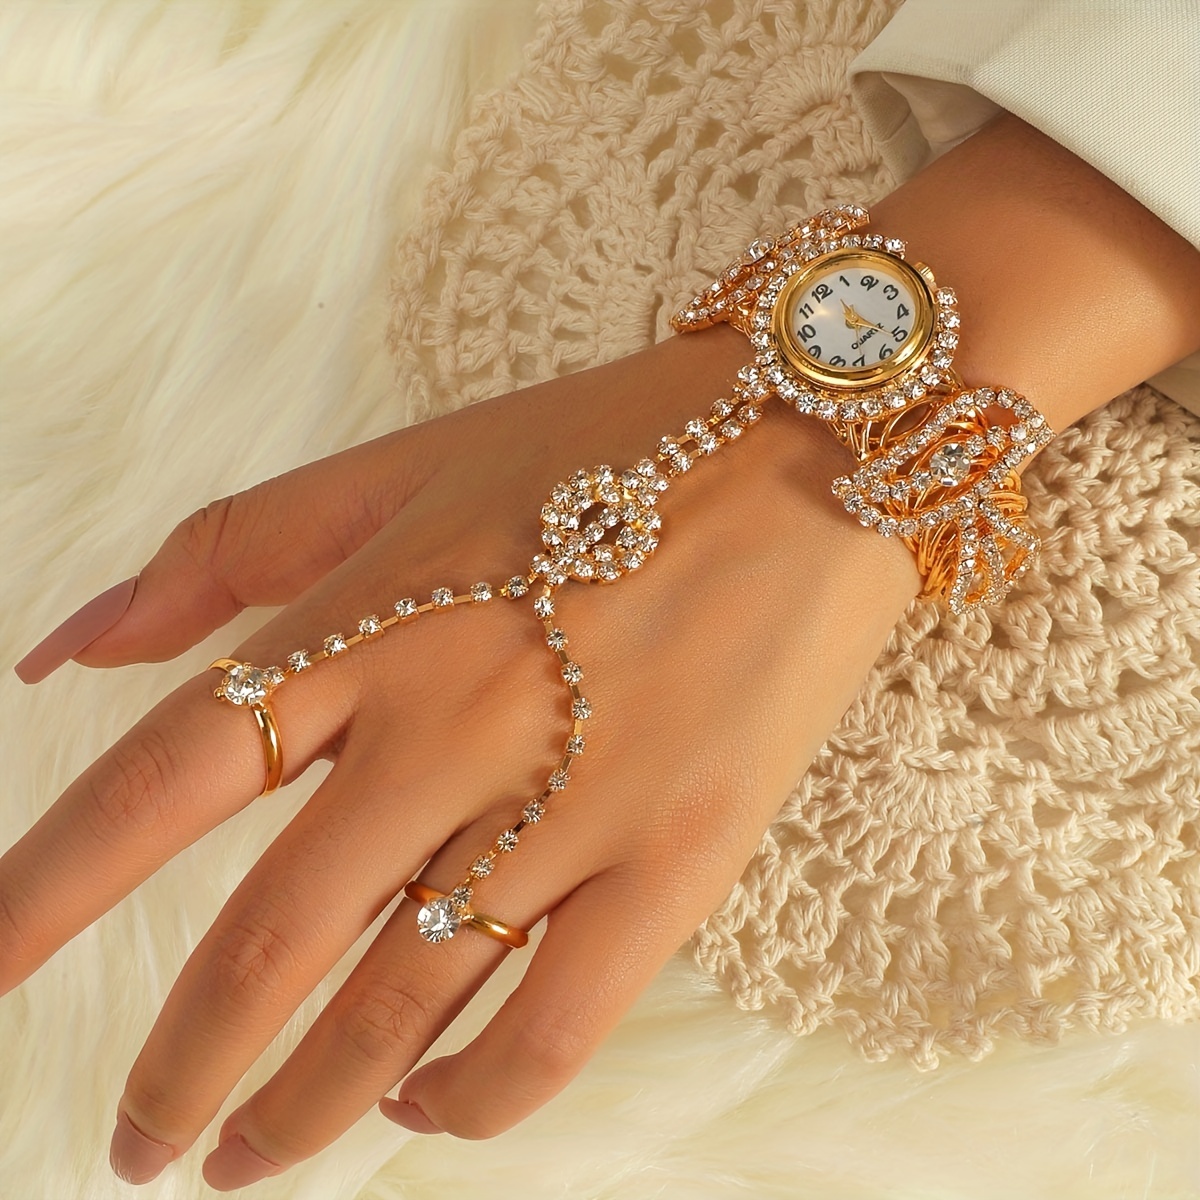 

Women's Watch Baroque Rhinestone Quartz Bracelet Watch With Rings Shiny Fashion Analog Party Bangle Cuff Watch